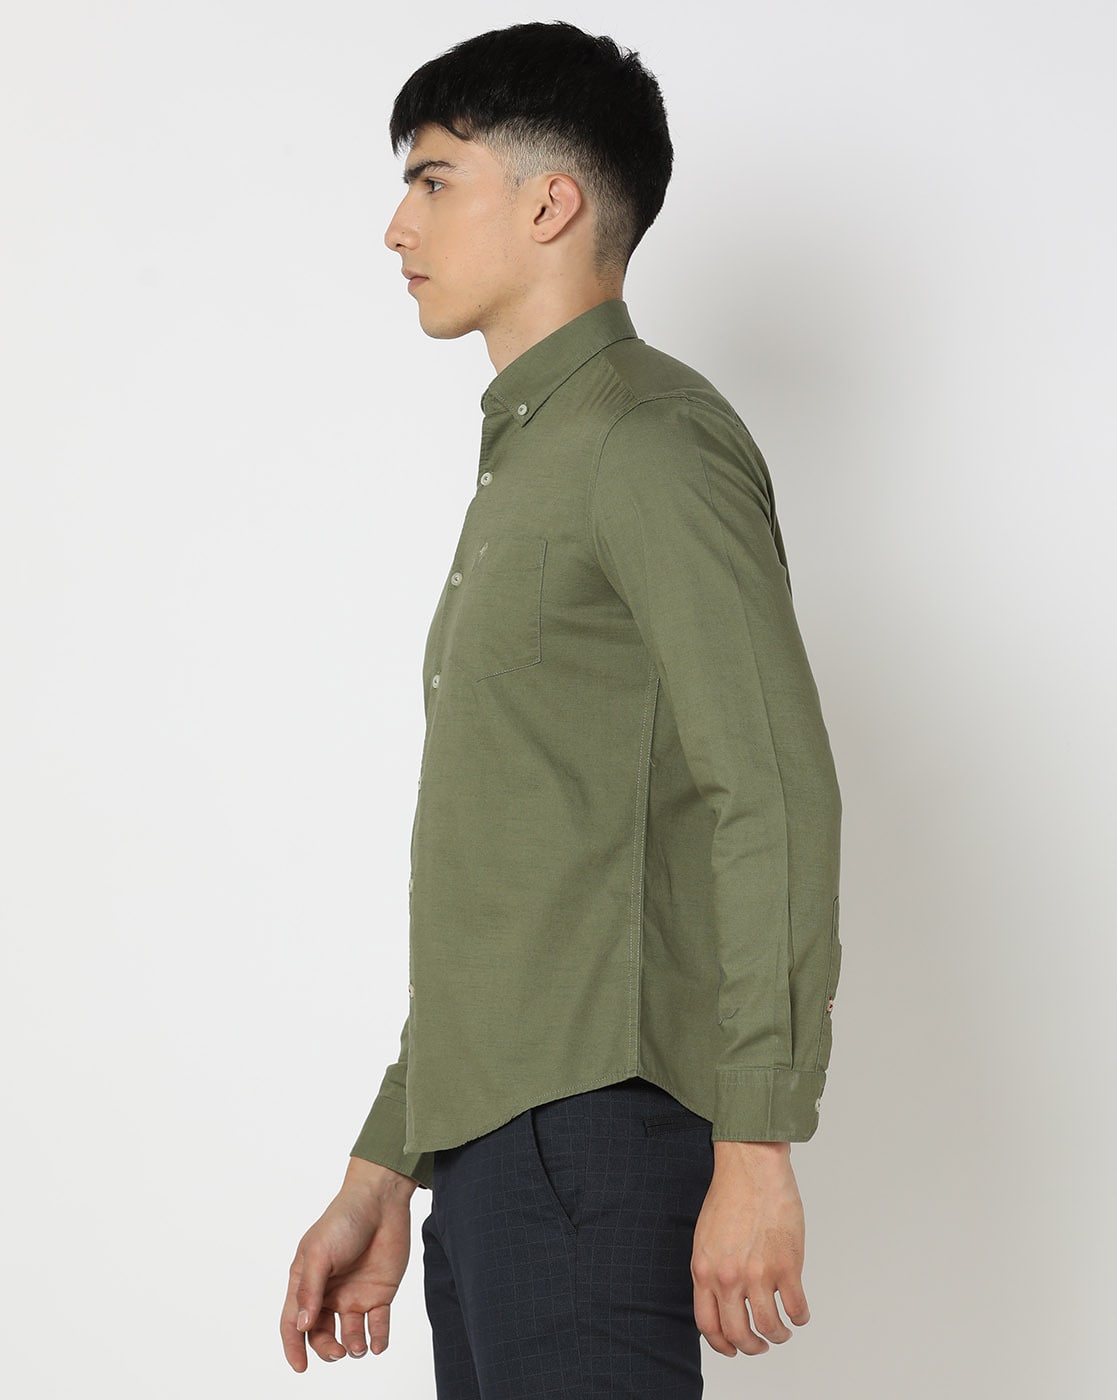 Regular Fit Oxford shirt - Khaki green - Men | H&M IN